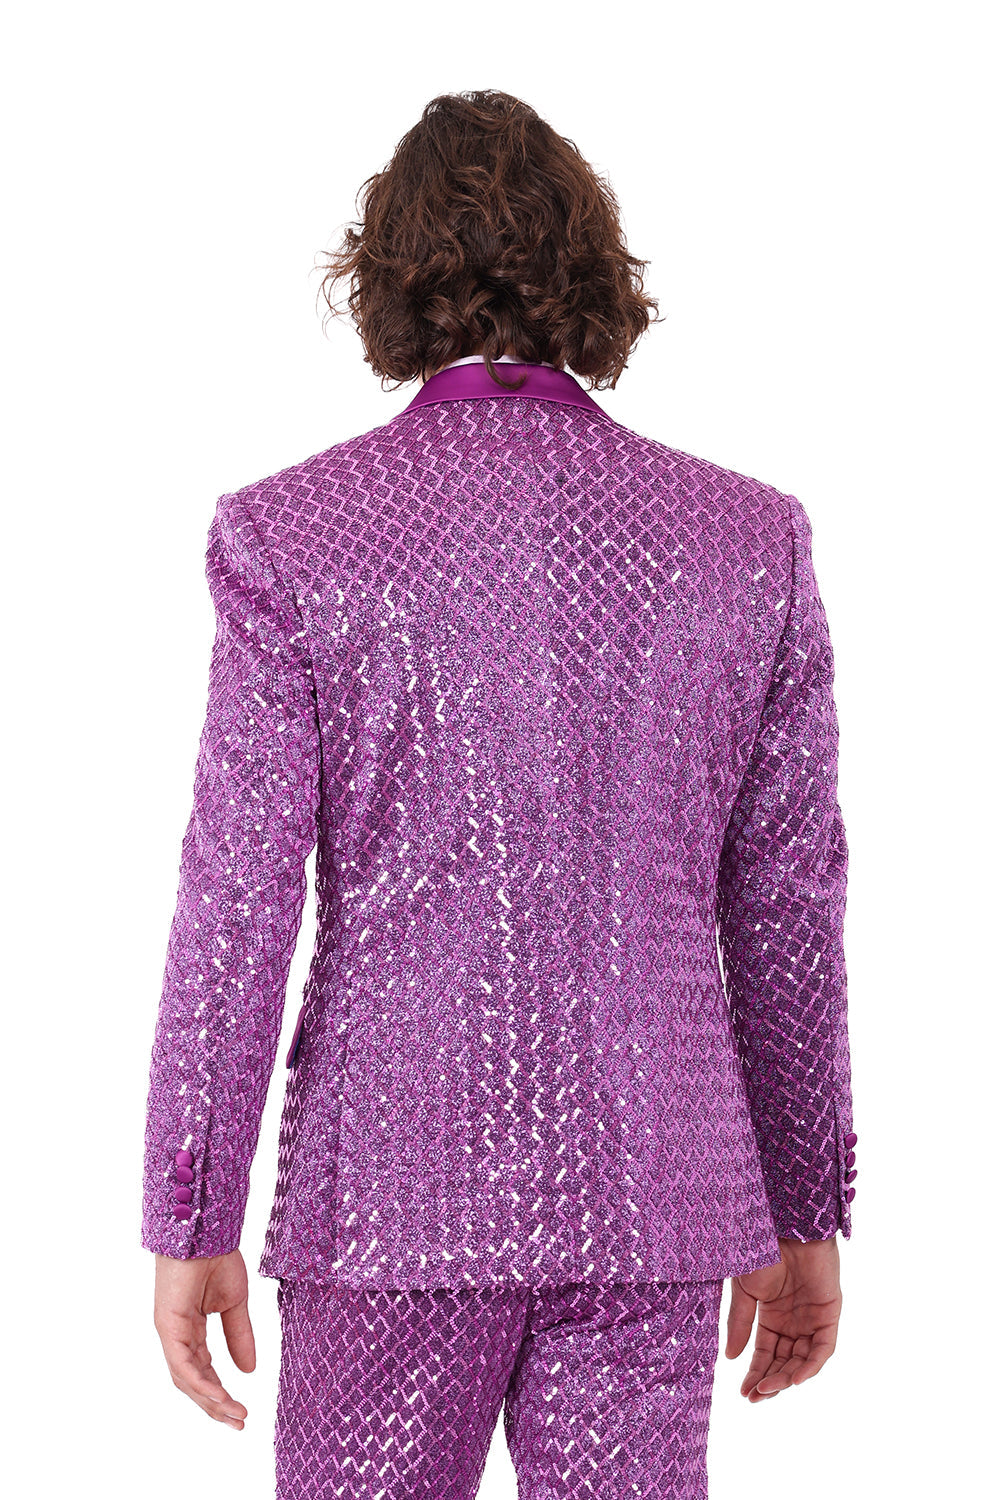 BARABAS Men's Diamond Sequin Design Notched black Blazer 2BL3099 Purple